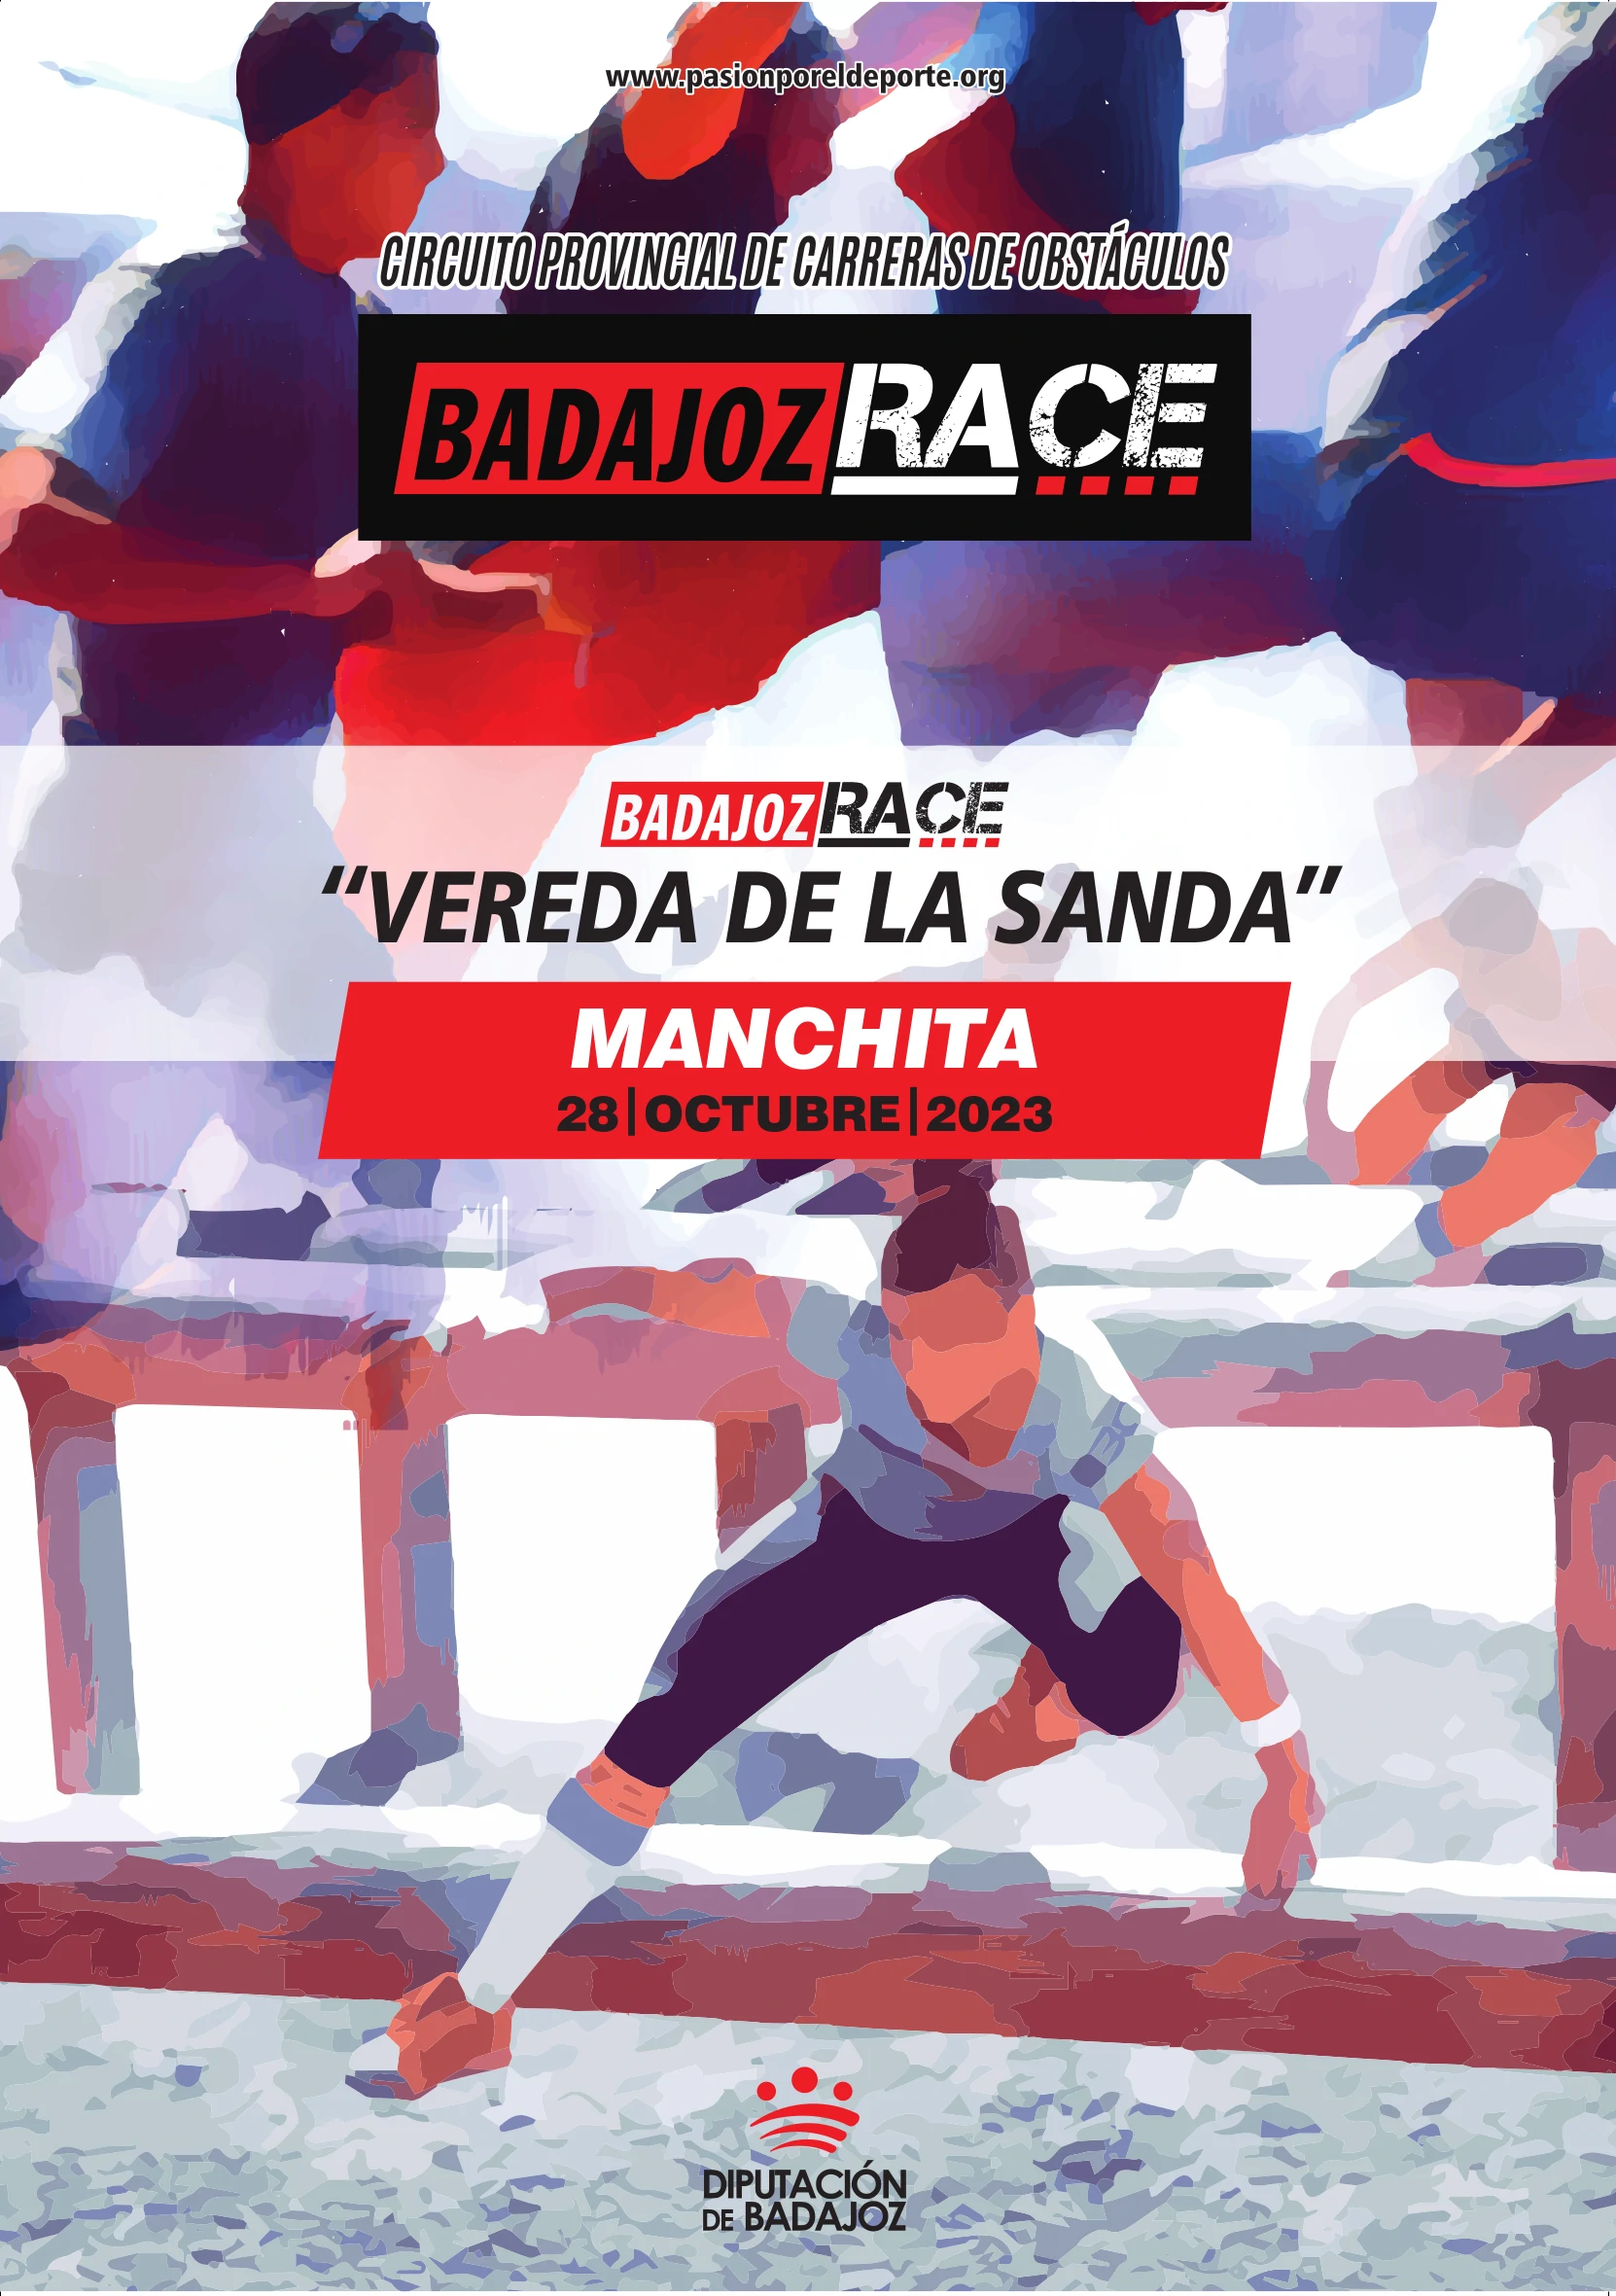 Manchita Badajoz Race<br />«Vereda de la Sanda»</Vereda>